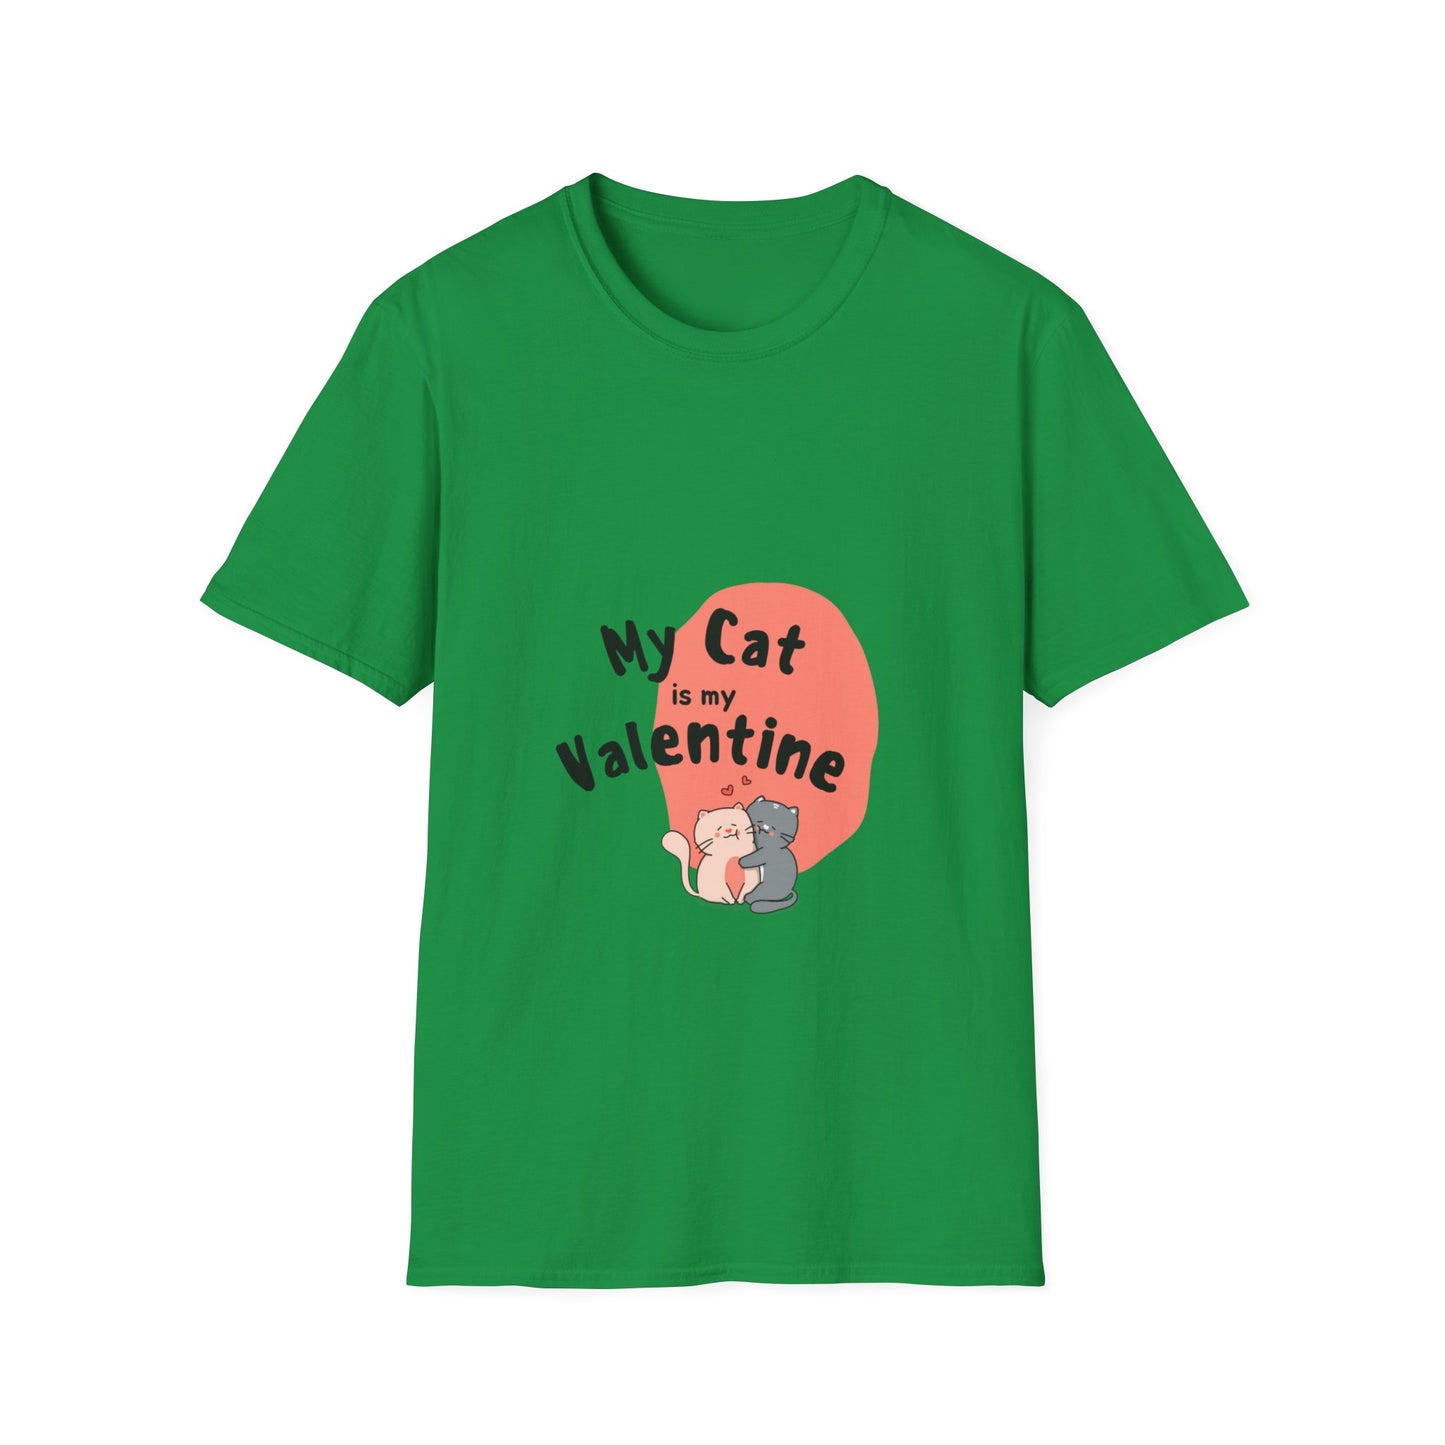 My Cat is My Valentine Shirt!